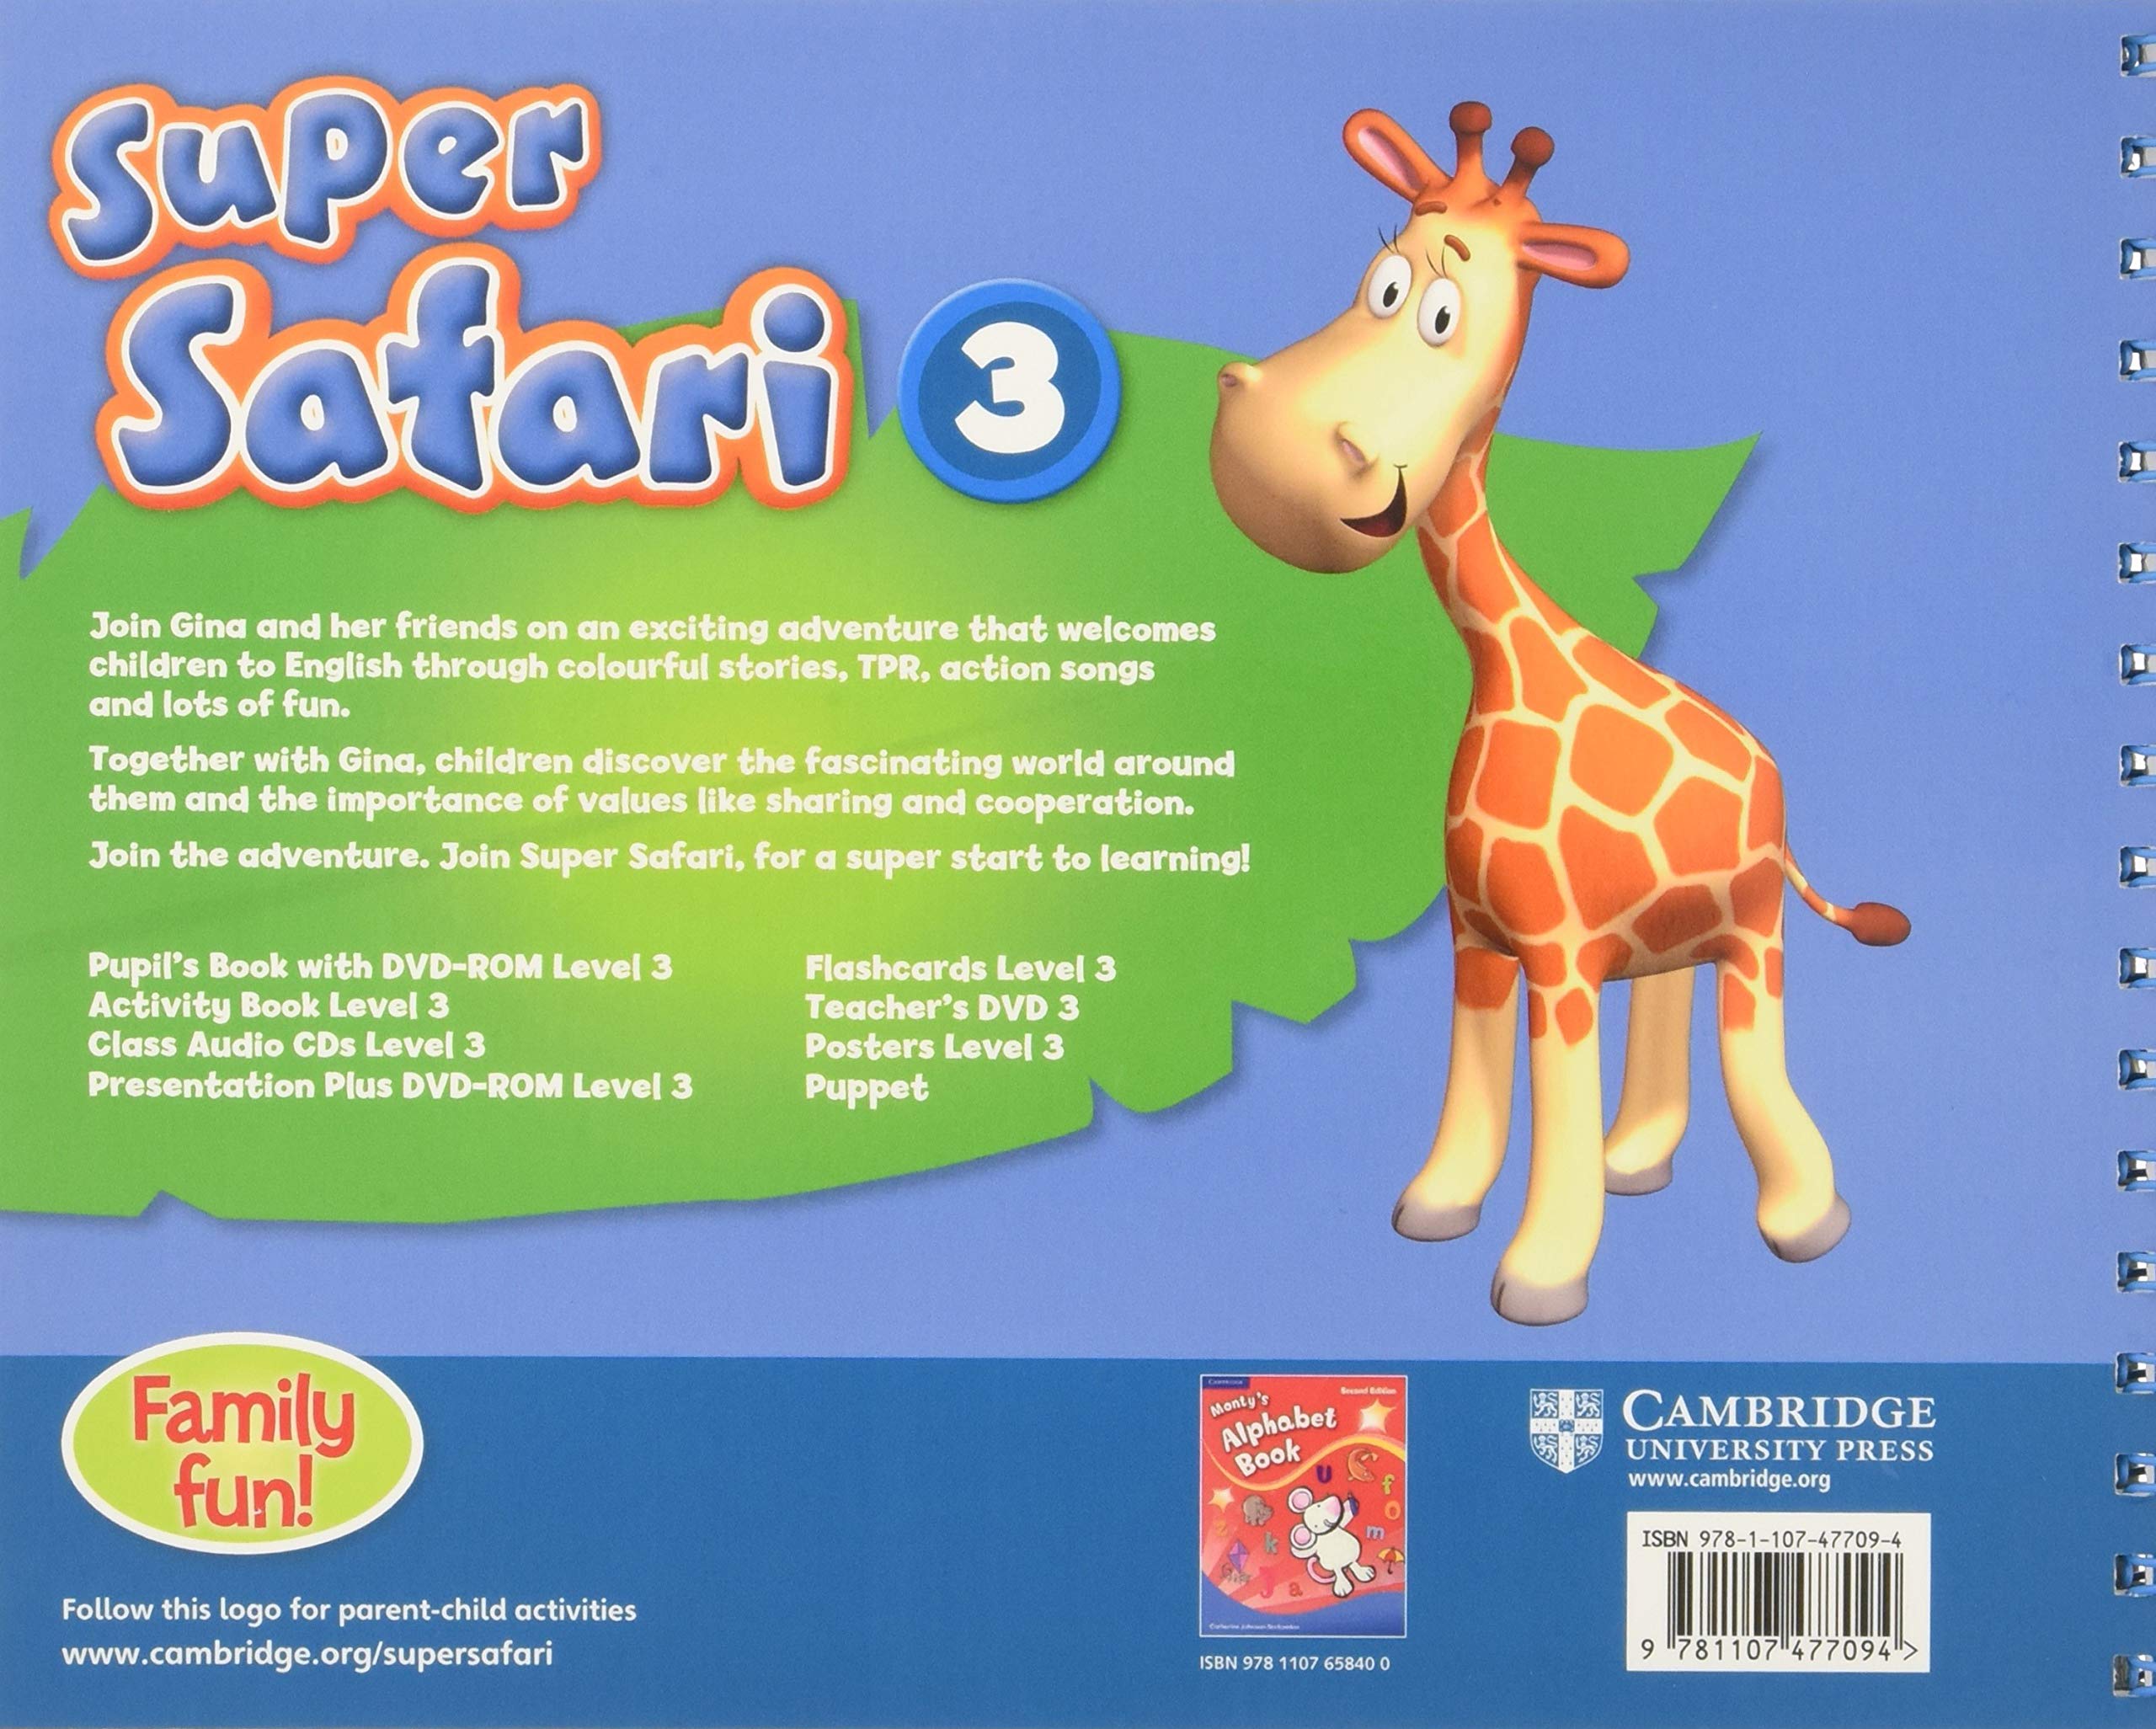 super safari 3 teacher's book pdf free download